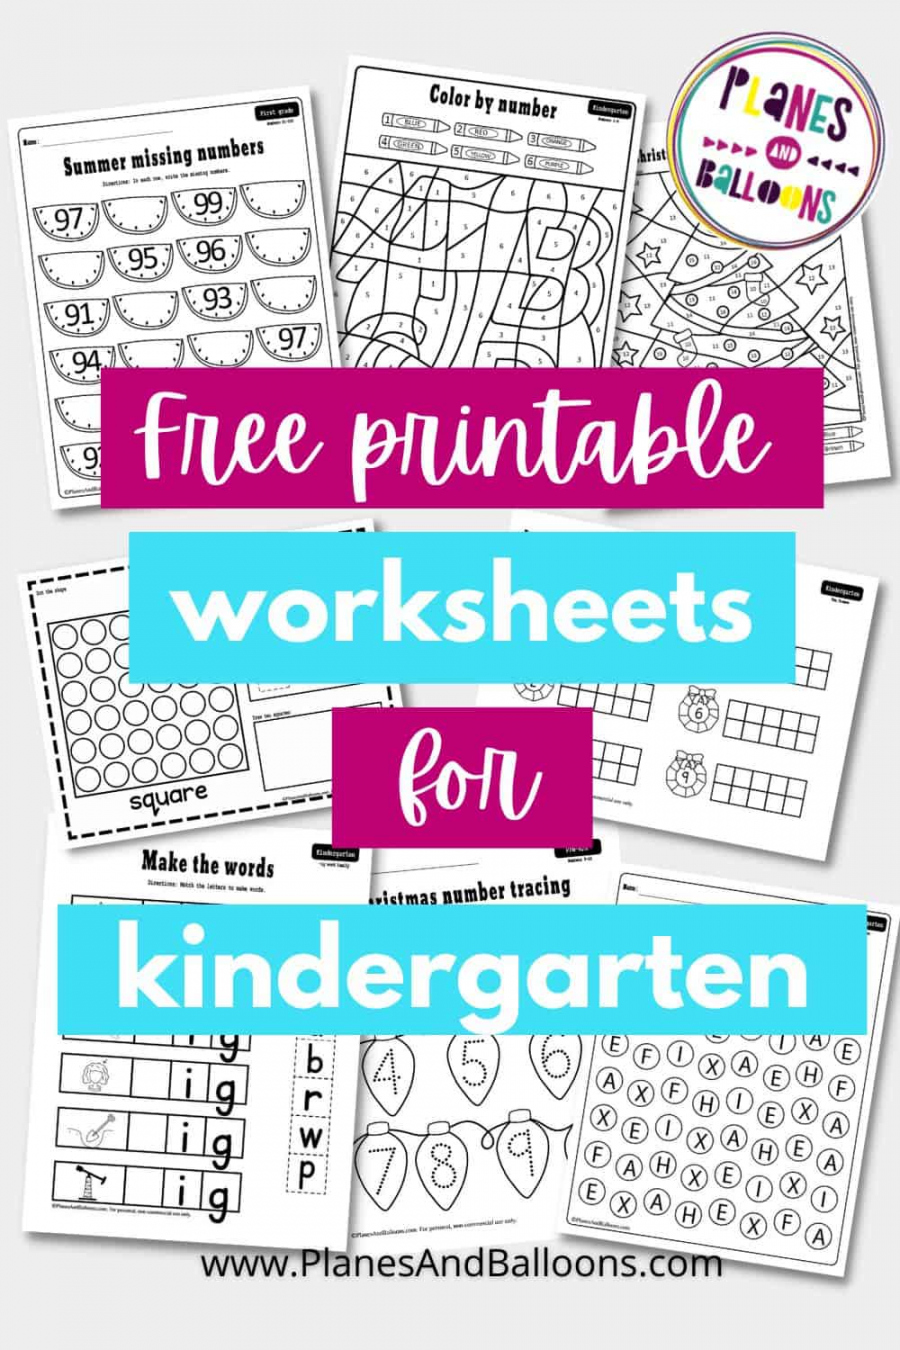 Free Printable Kindergarten Worksheets PDF - Planes & Balloons